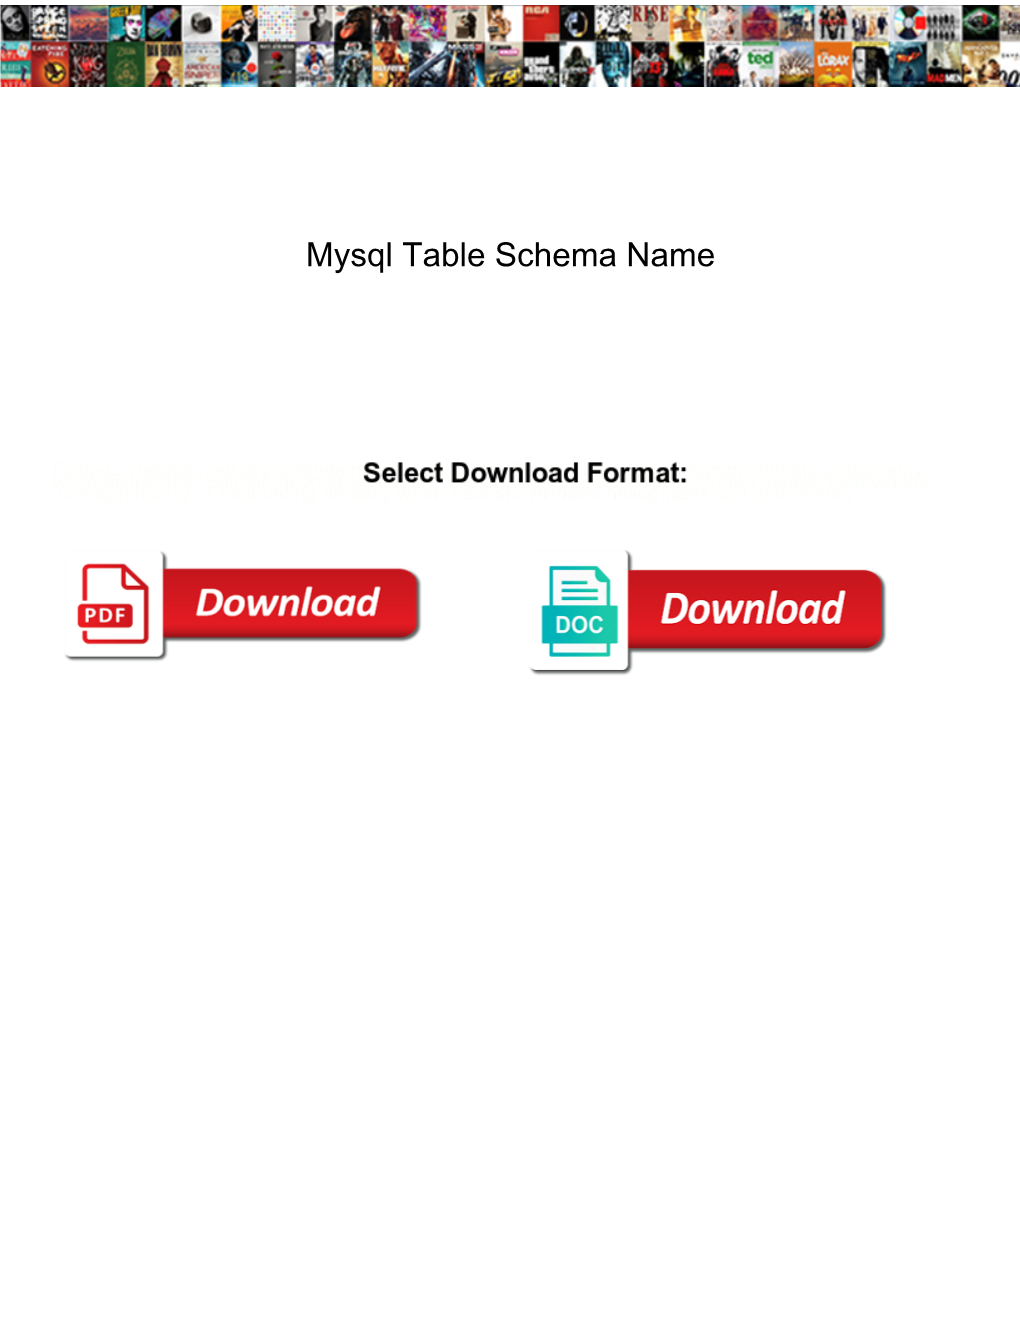 Mysql Table Schema Name